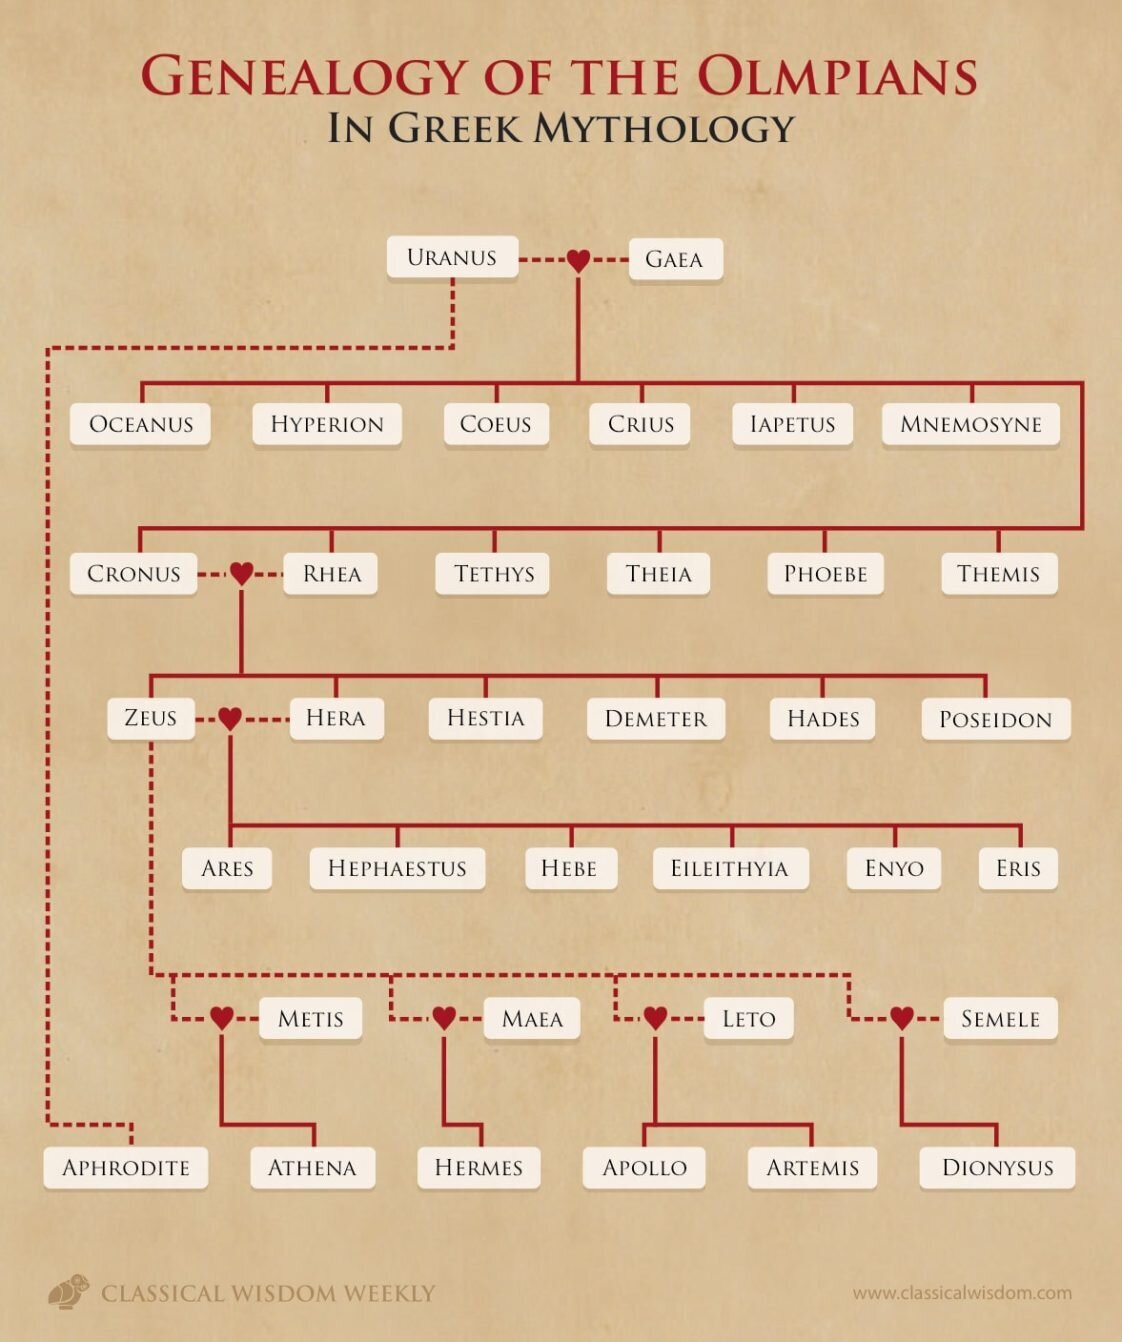 Genealogy of the Olympians in Greek Mythology, via Classic Wisdom